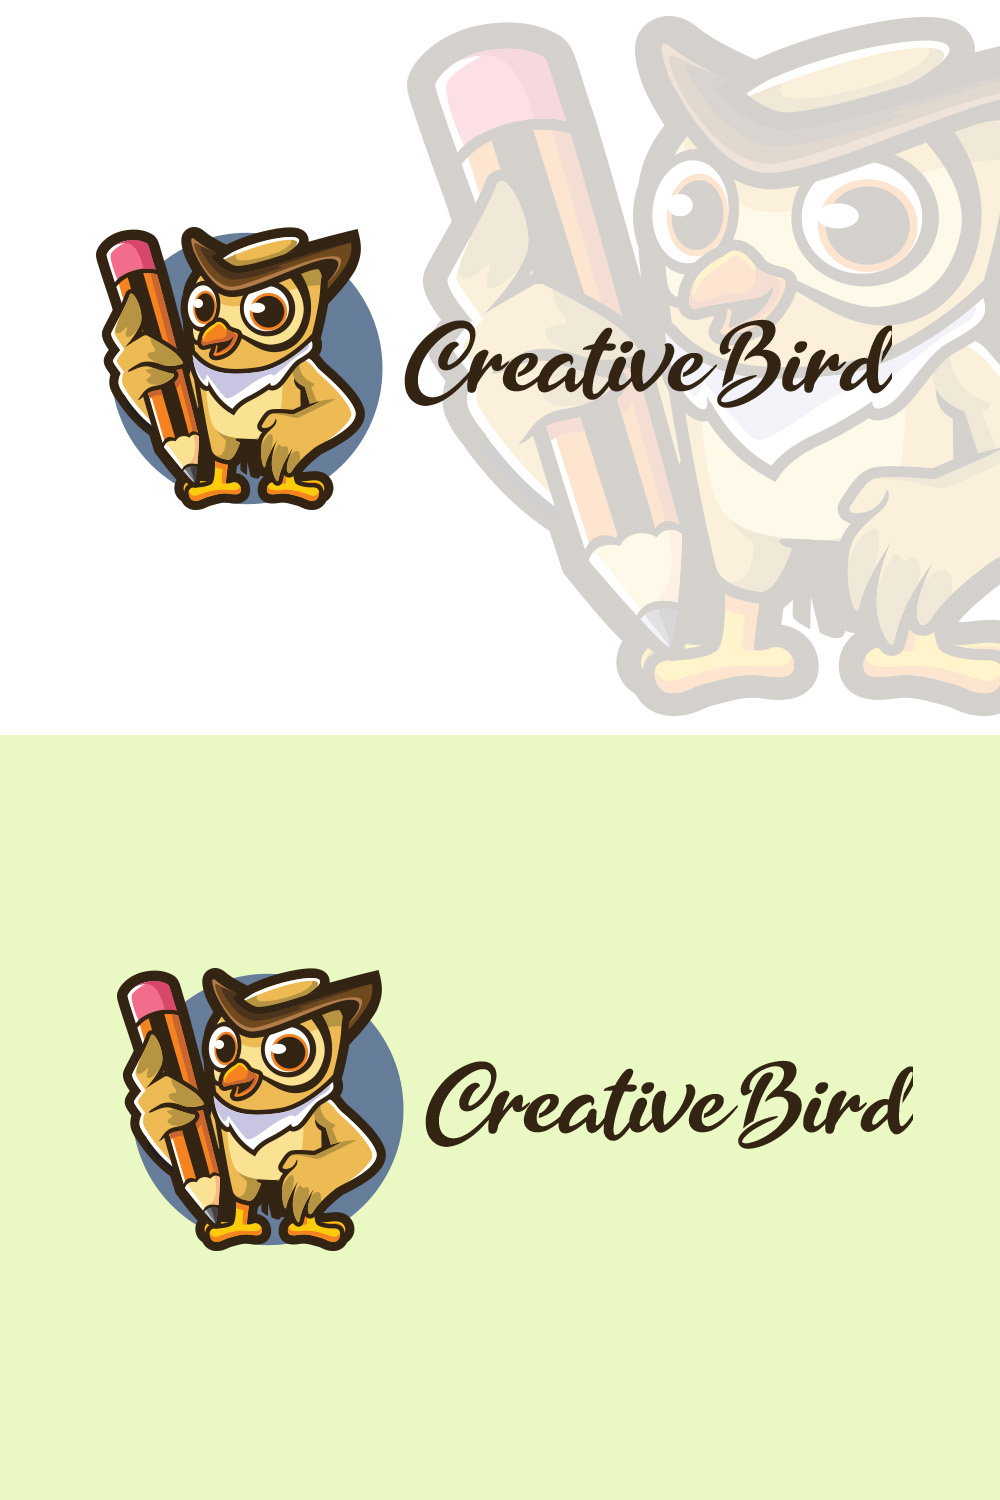 Creative Bird - Owl Character Mascot Design pinterest preview image.